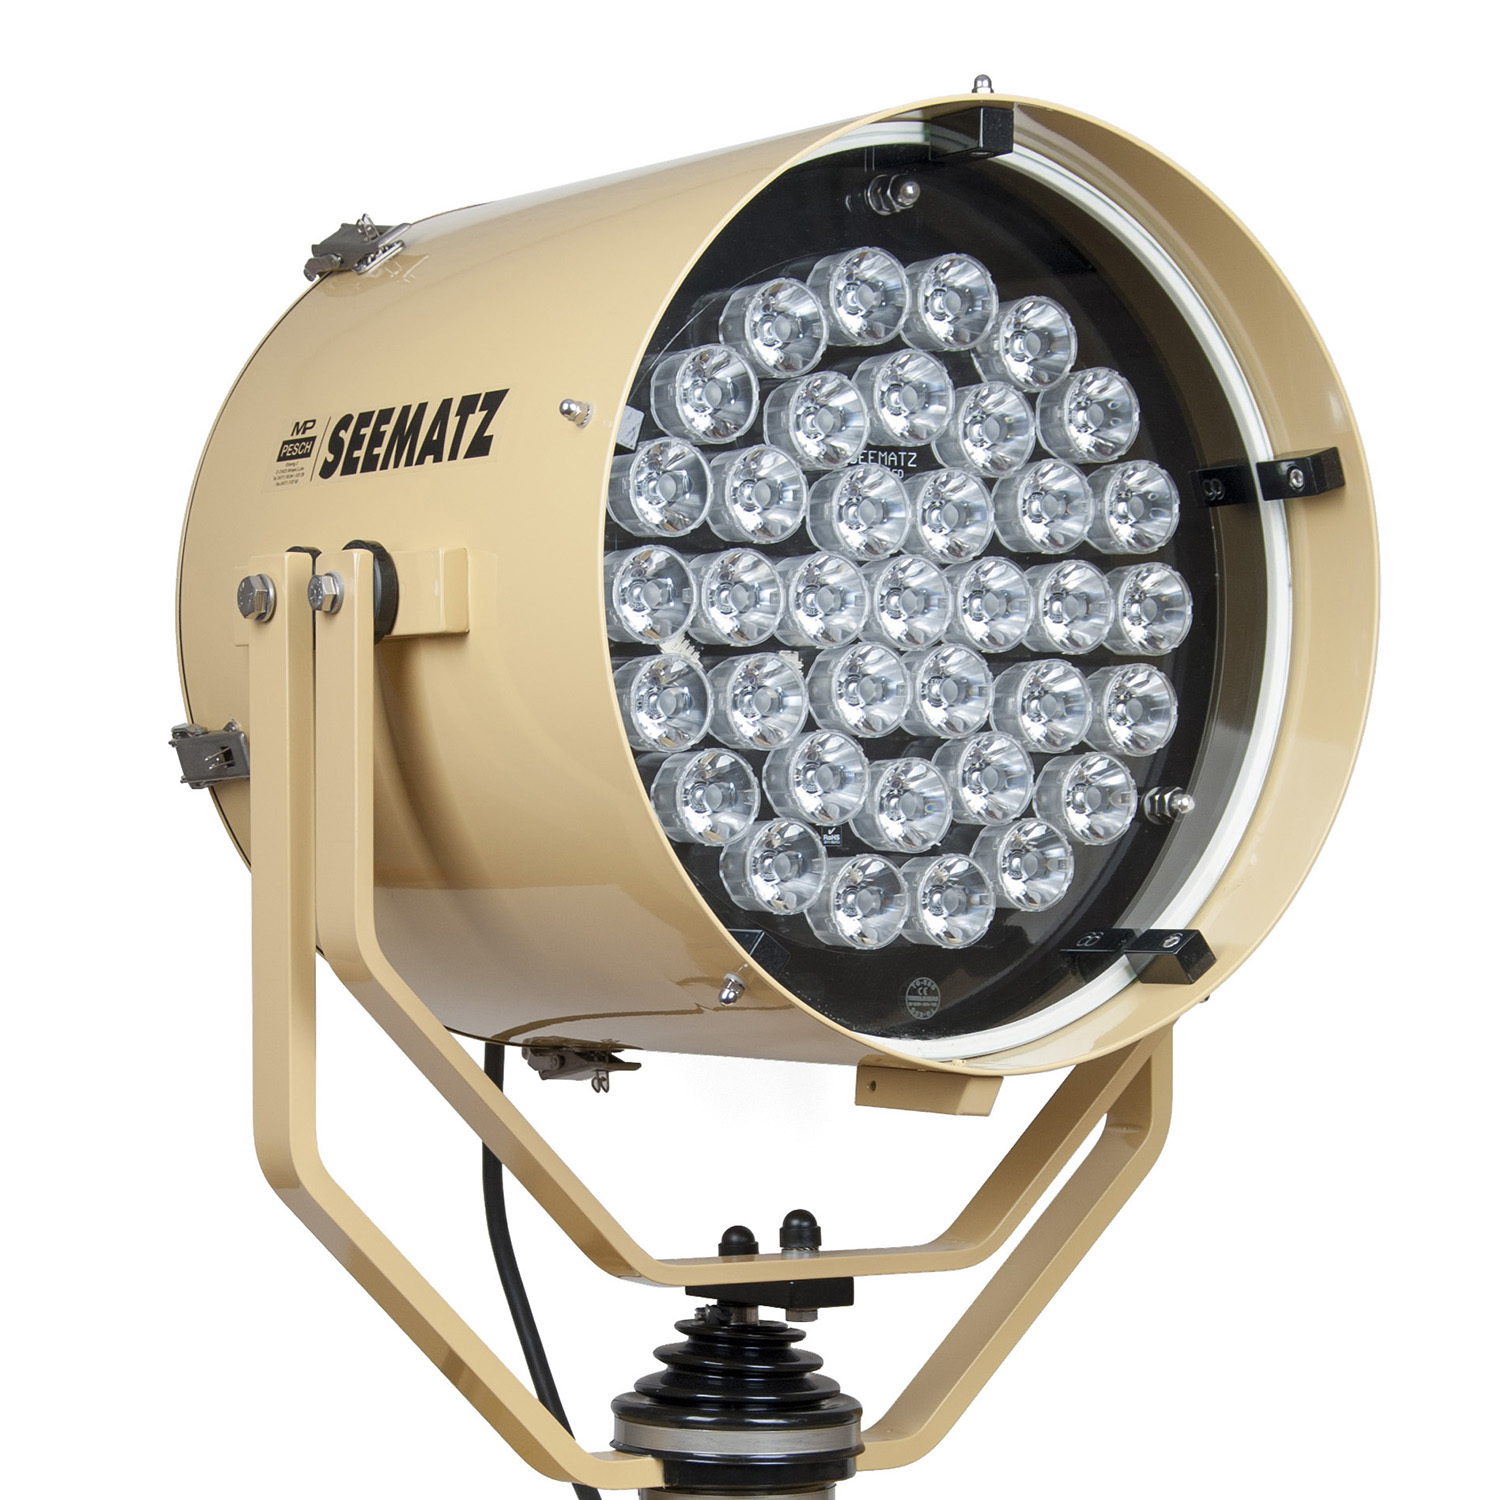 LED Search Light LRFLL Model - 500 M Range